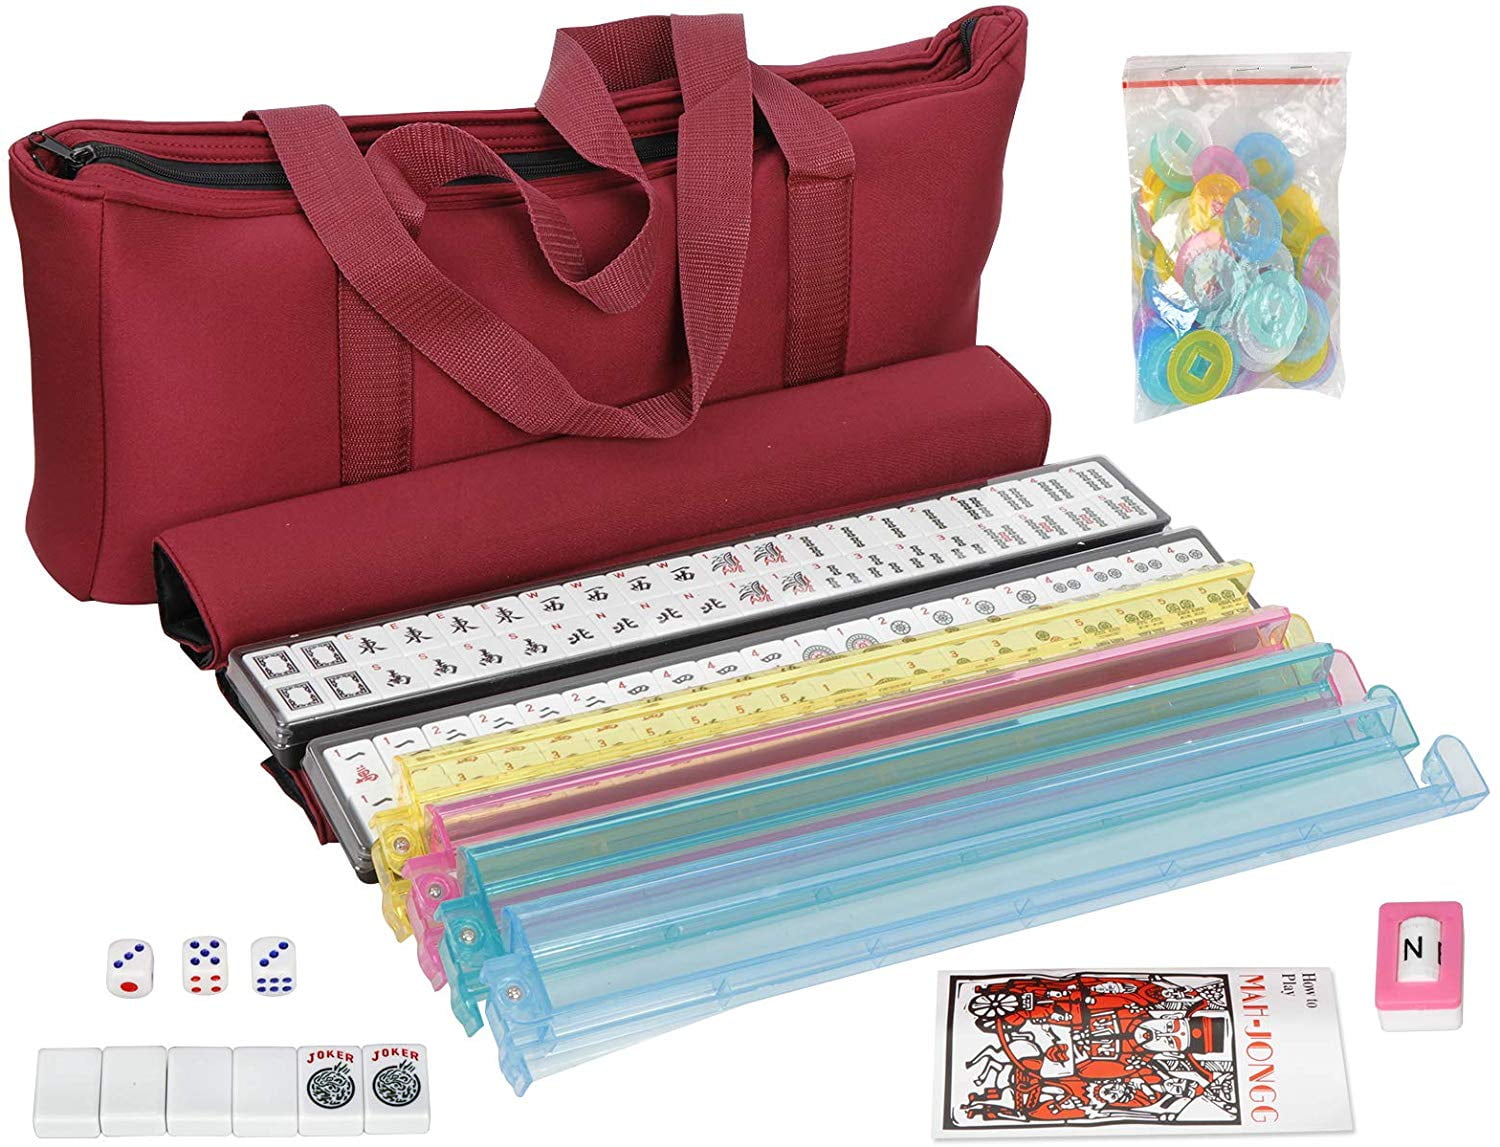 4 Rack/Pushers,Soft American Jongg Bag Mah All-in-One Mahjong Tile ZENSTYLE Set with 166